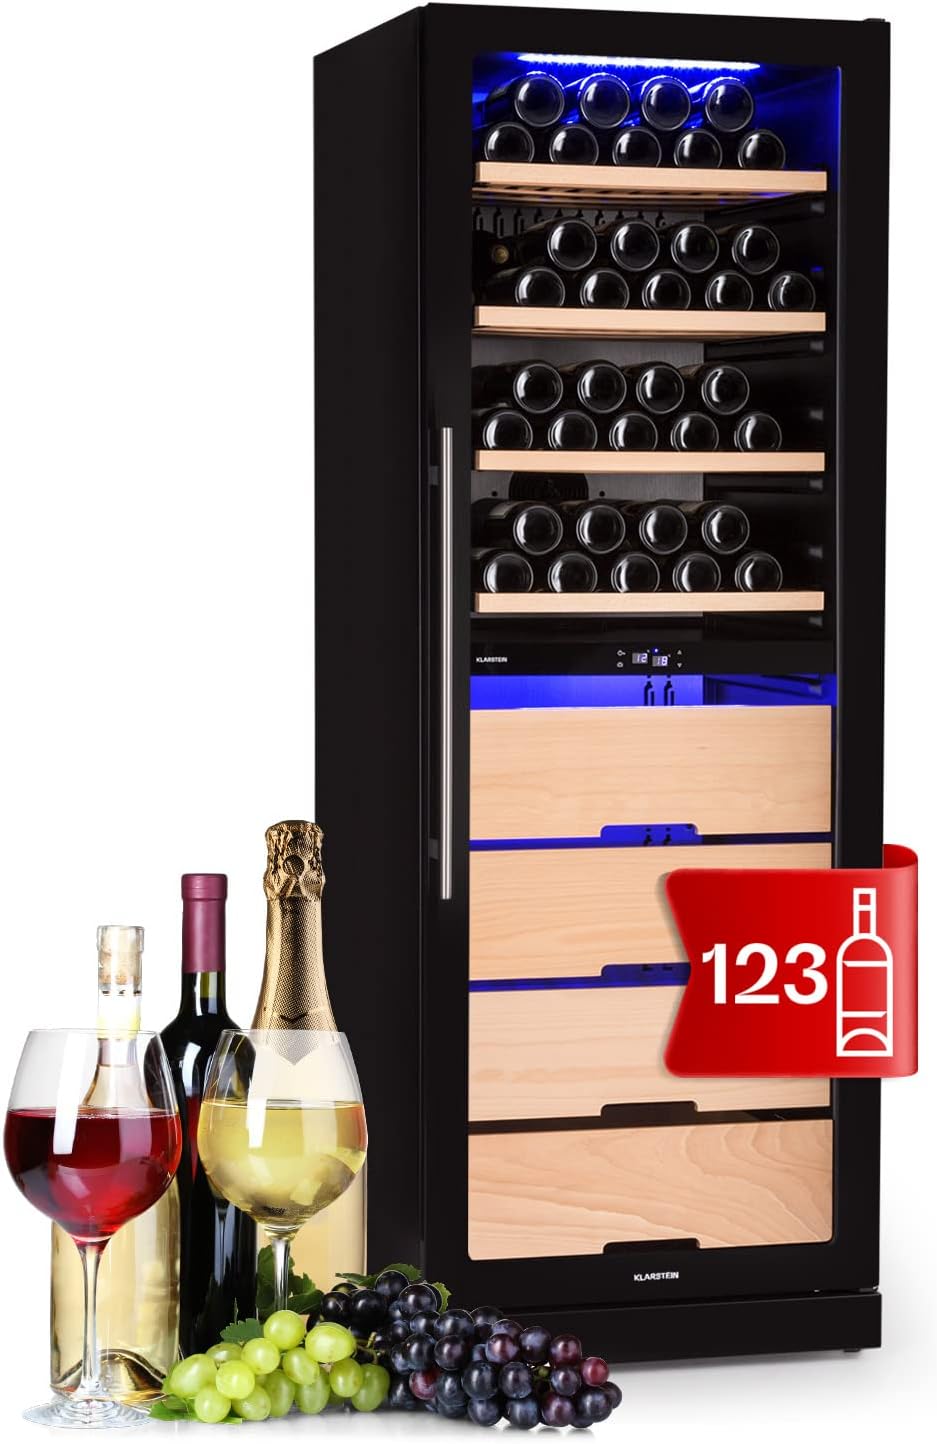 Klarstein Wine Fridge, Drinks Refrigerator, Slim, 2 Zone Fridge with Glass Door, Drinks Fridges, Freestanding, Wine Fridge, Small, Wine Fridge with UV Protection, 5-18 °C, 123 Bottles